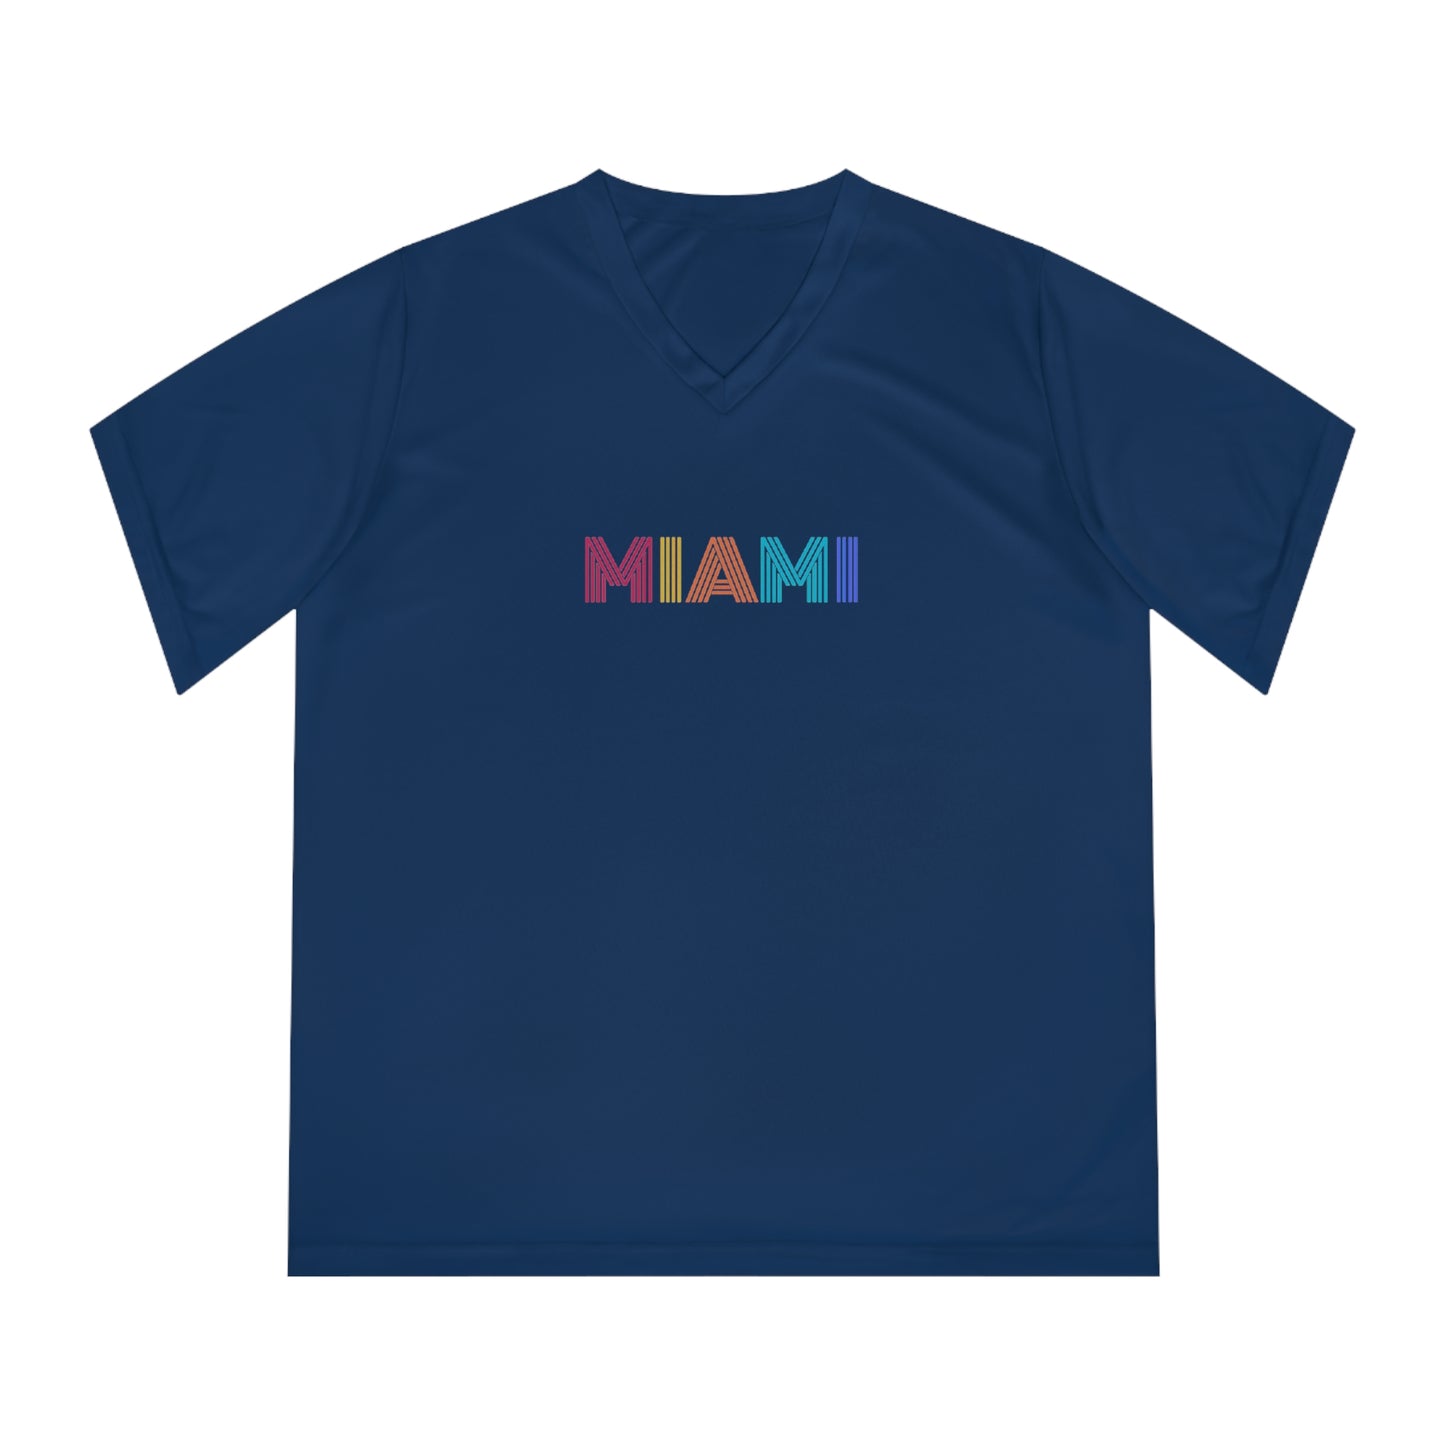 MIAMI Women's Performance V-Neck T-Shirt